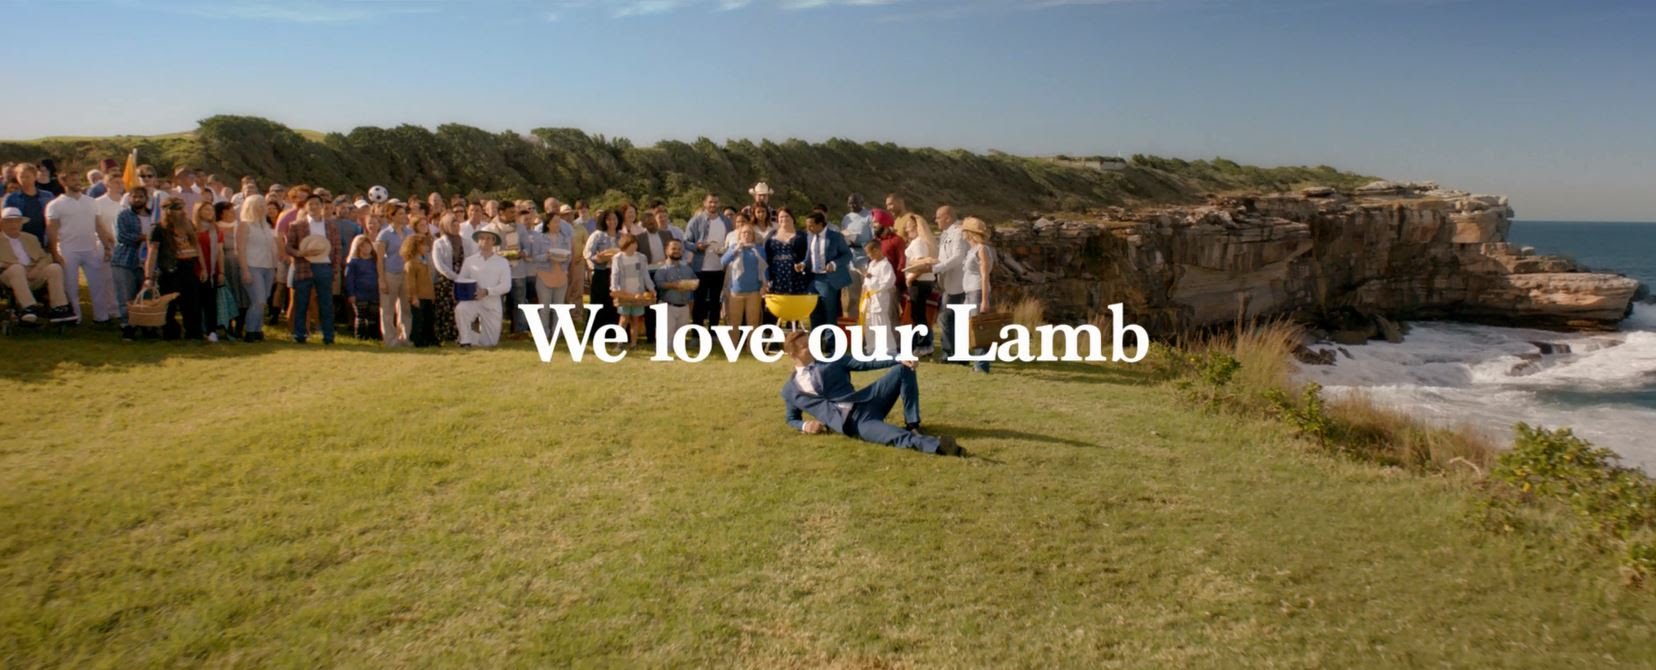 Jordan Raskopoulos honoured to be in TV ad about lamb